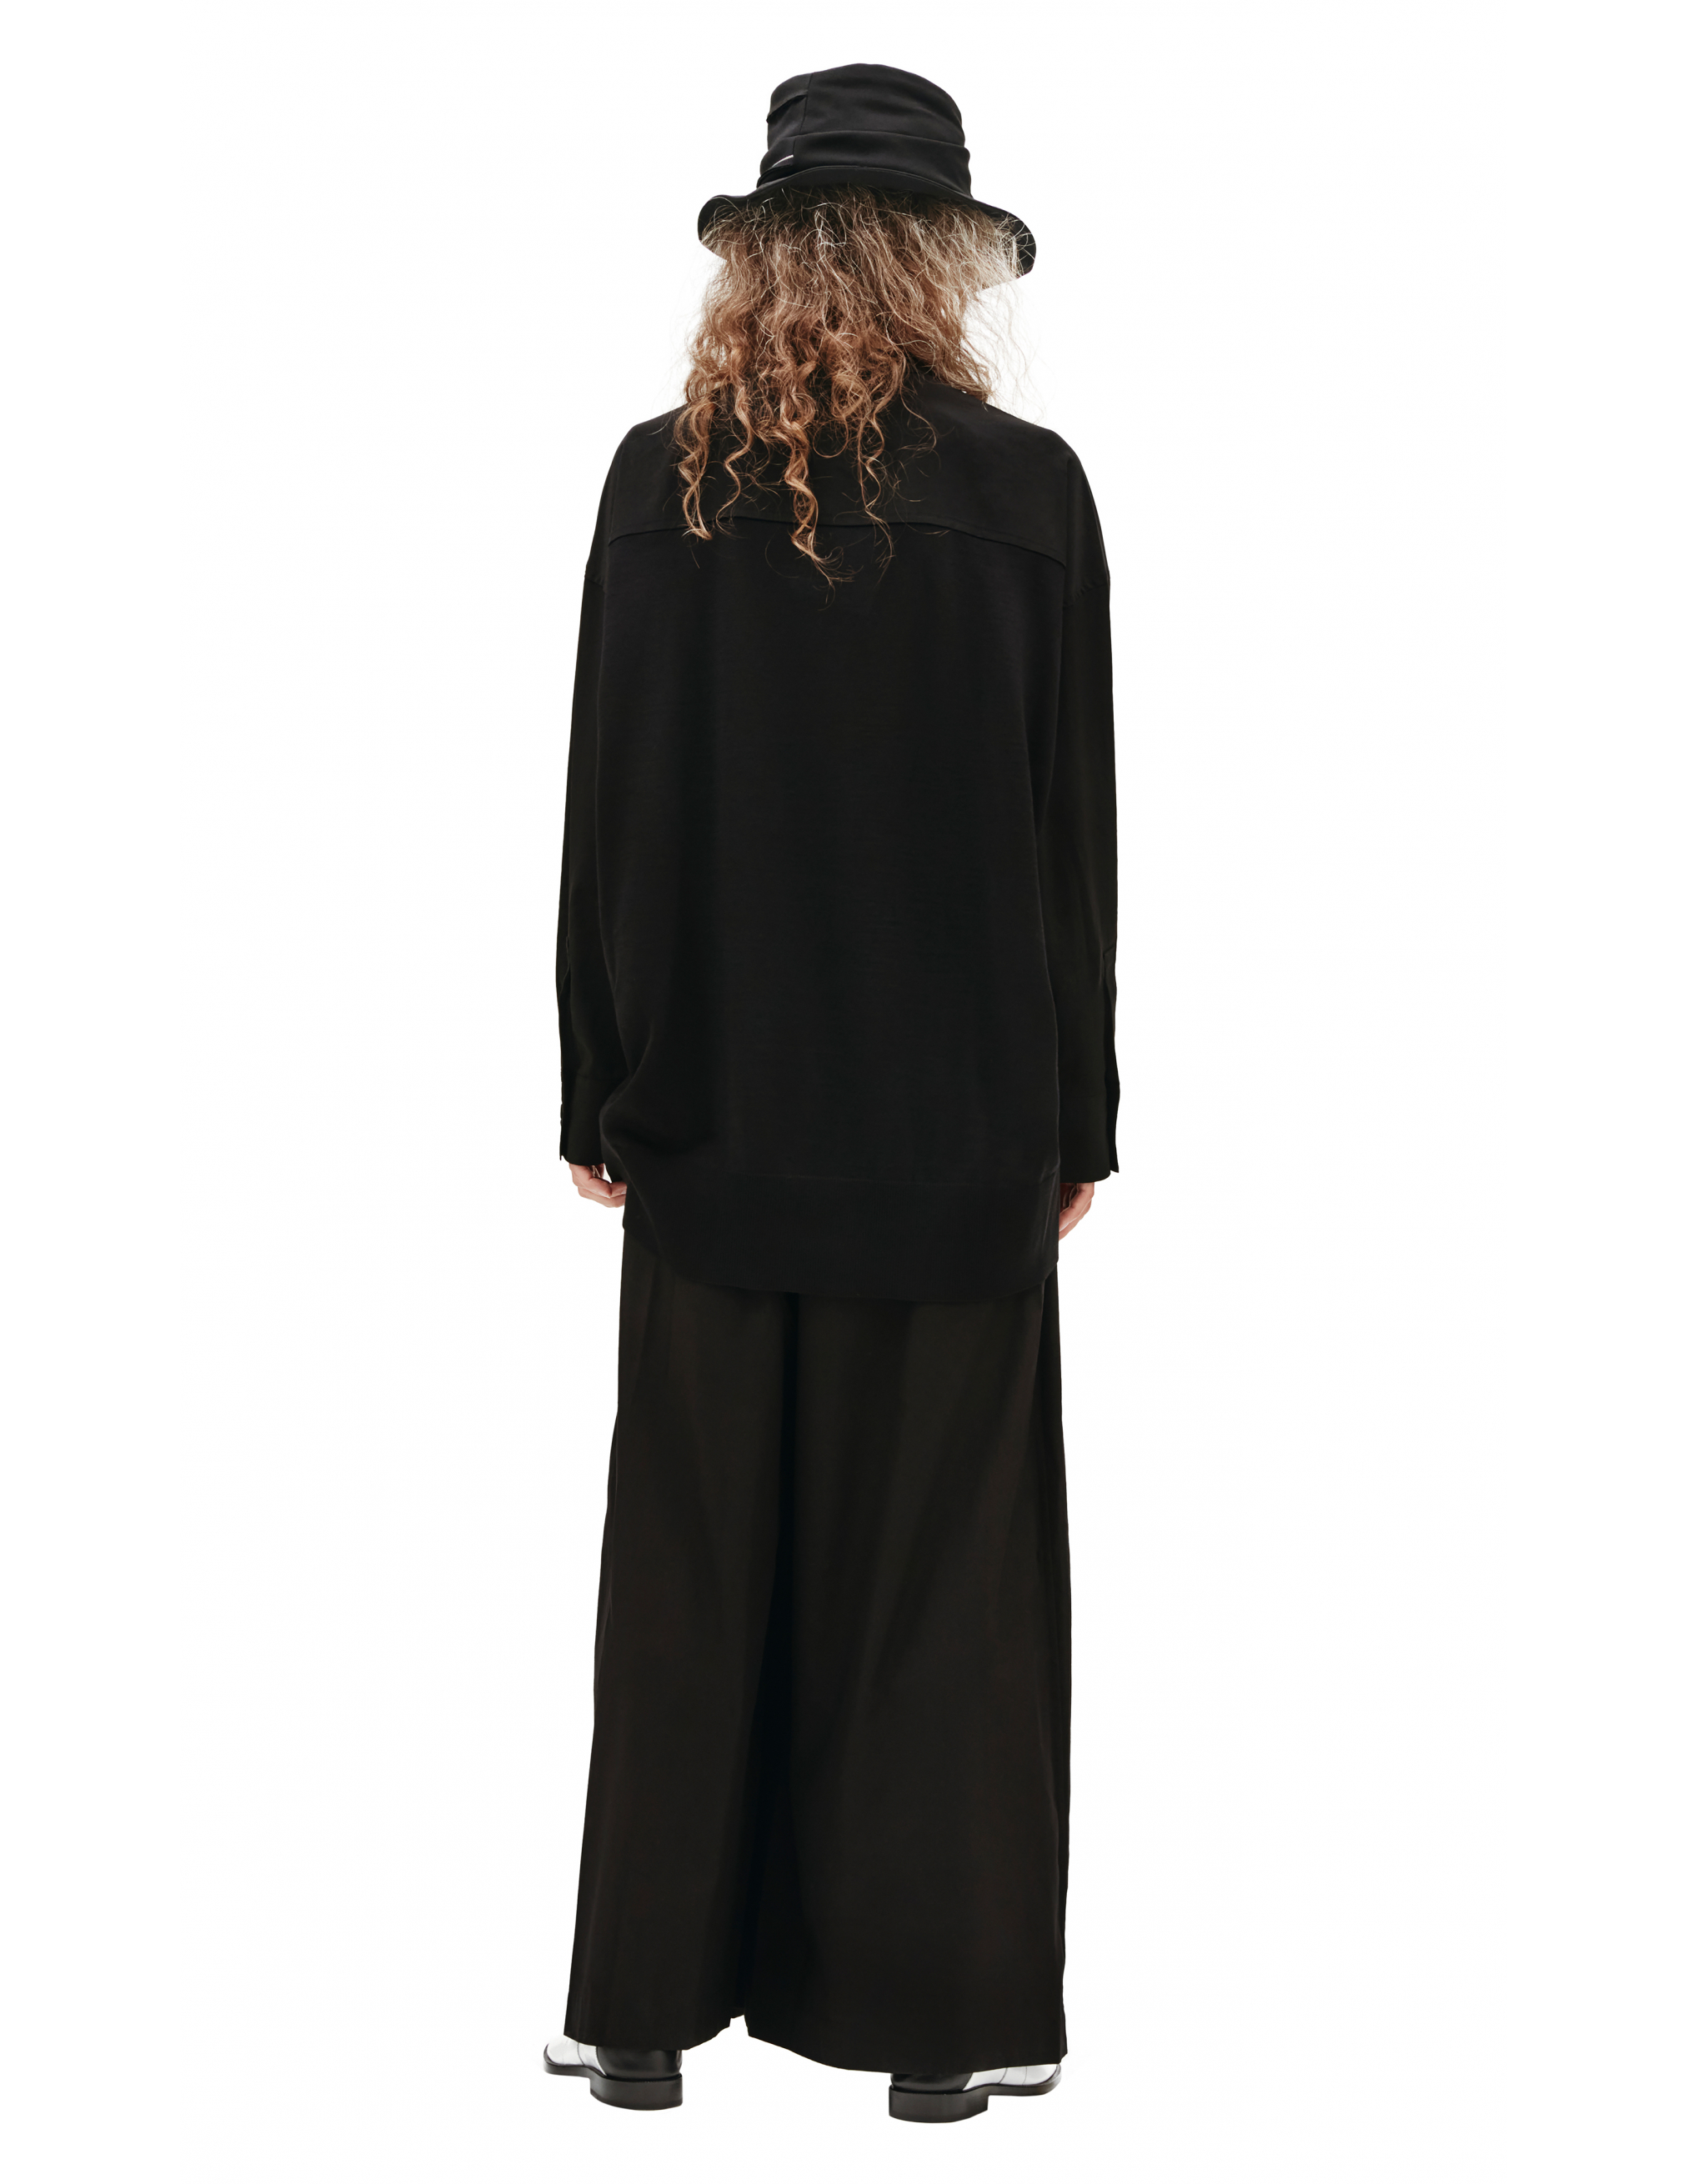 Комбинированная рубашка черного цвета Ys YM-K78-846-3, размер 2 - фото 3